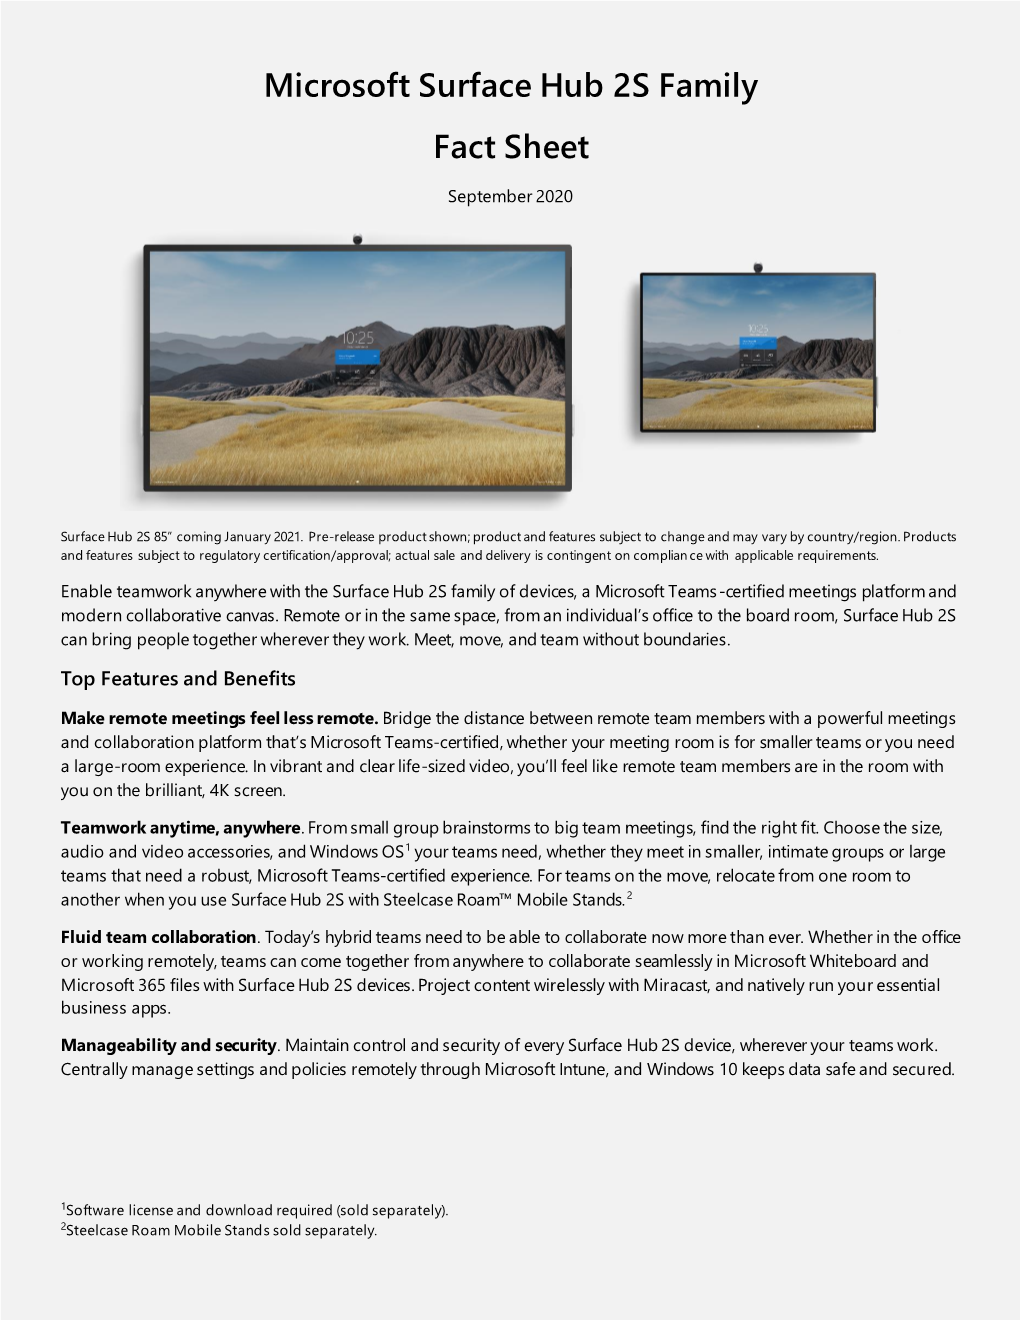 Microsoft Surface Hub 2S Family Fact Sheet